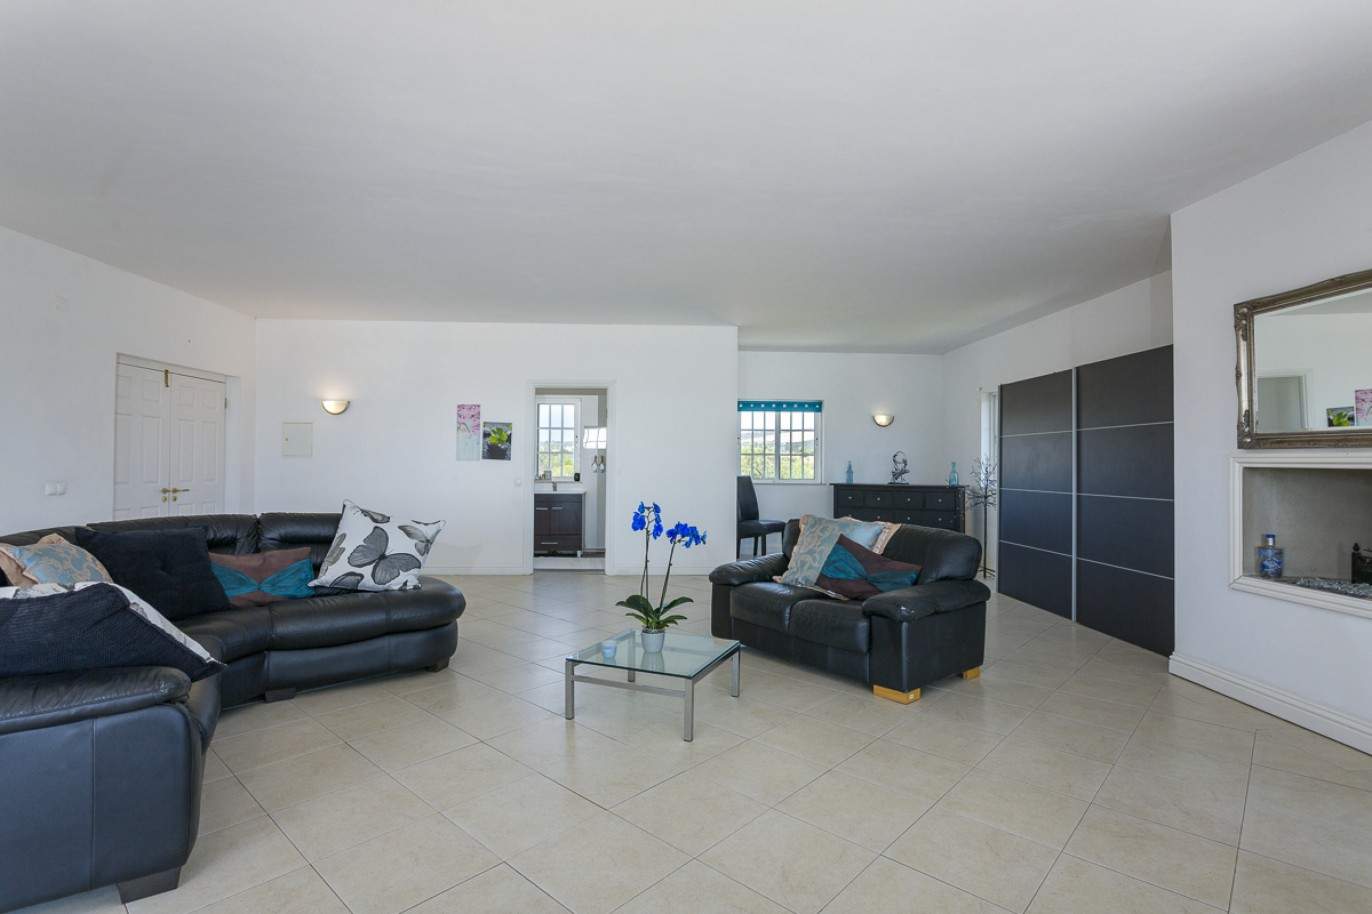 4 Bedroom Villa with sea view, for sale in Boliqueime, Algarve_209956